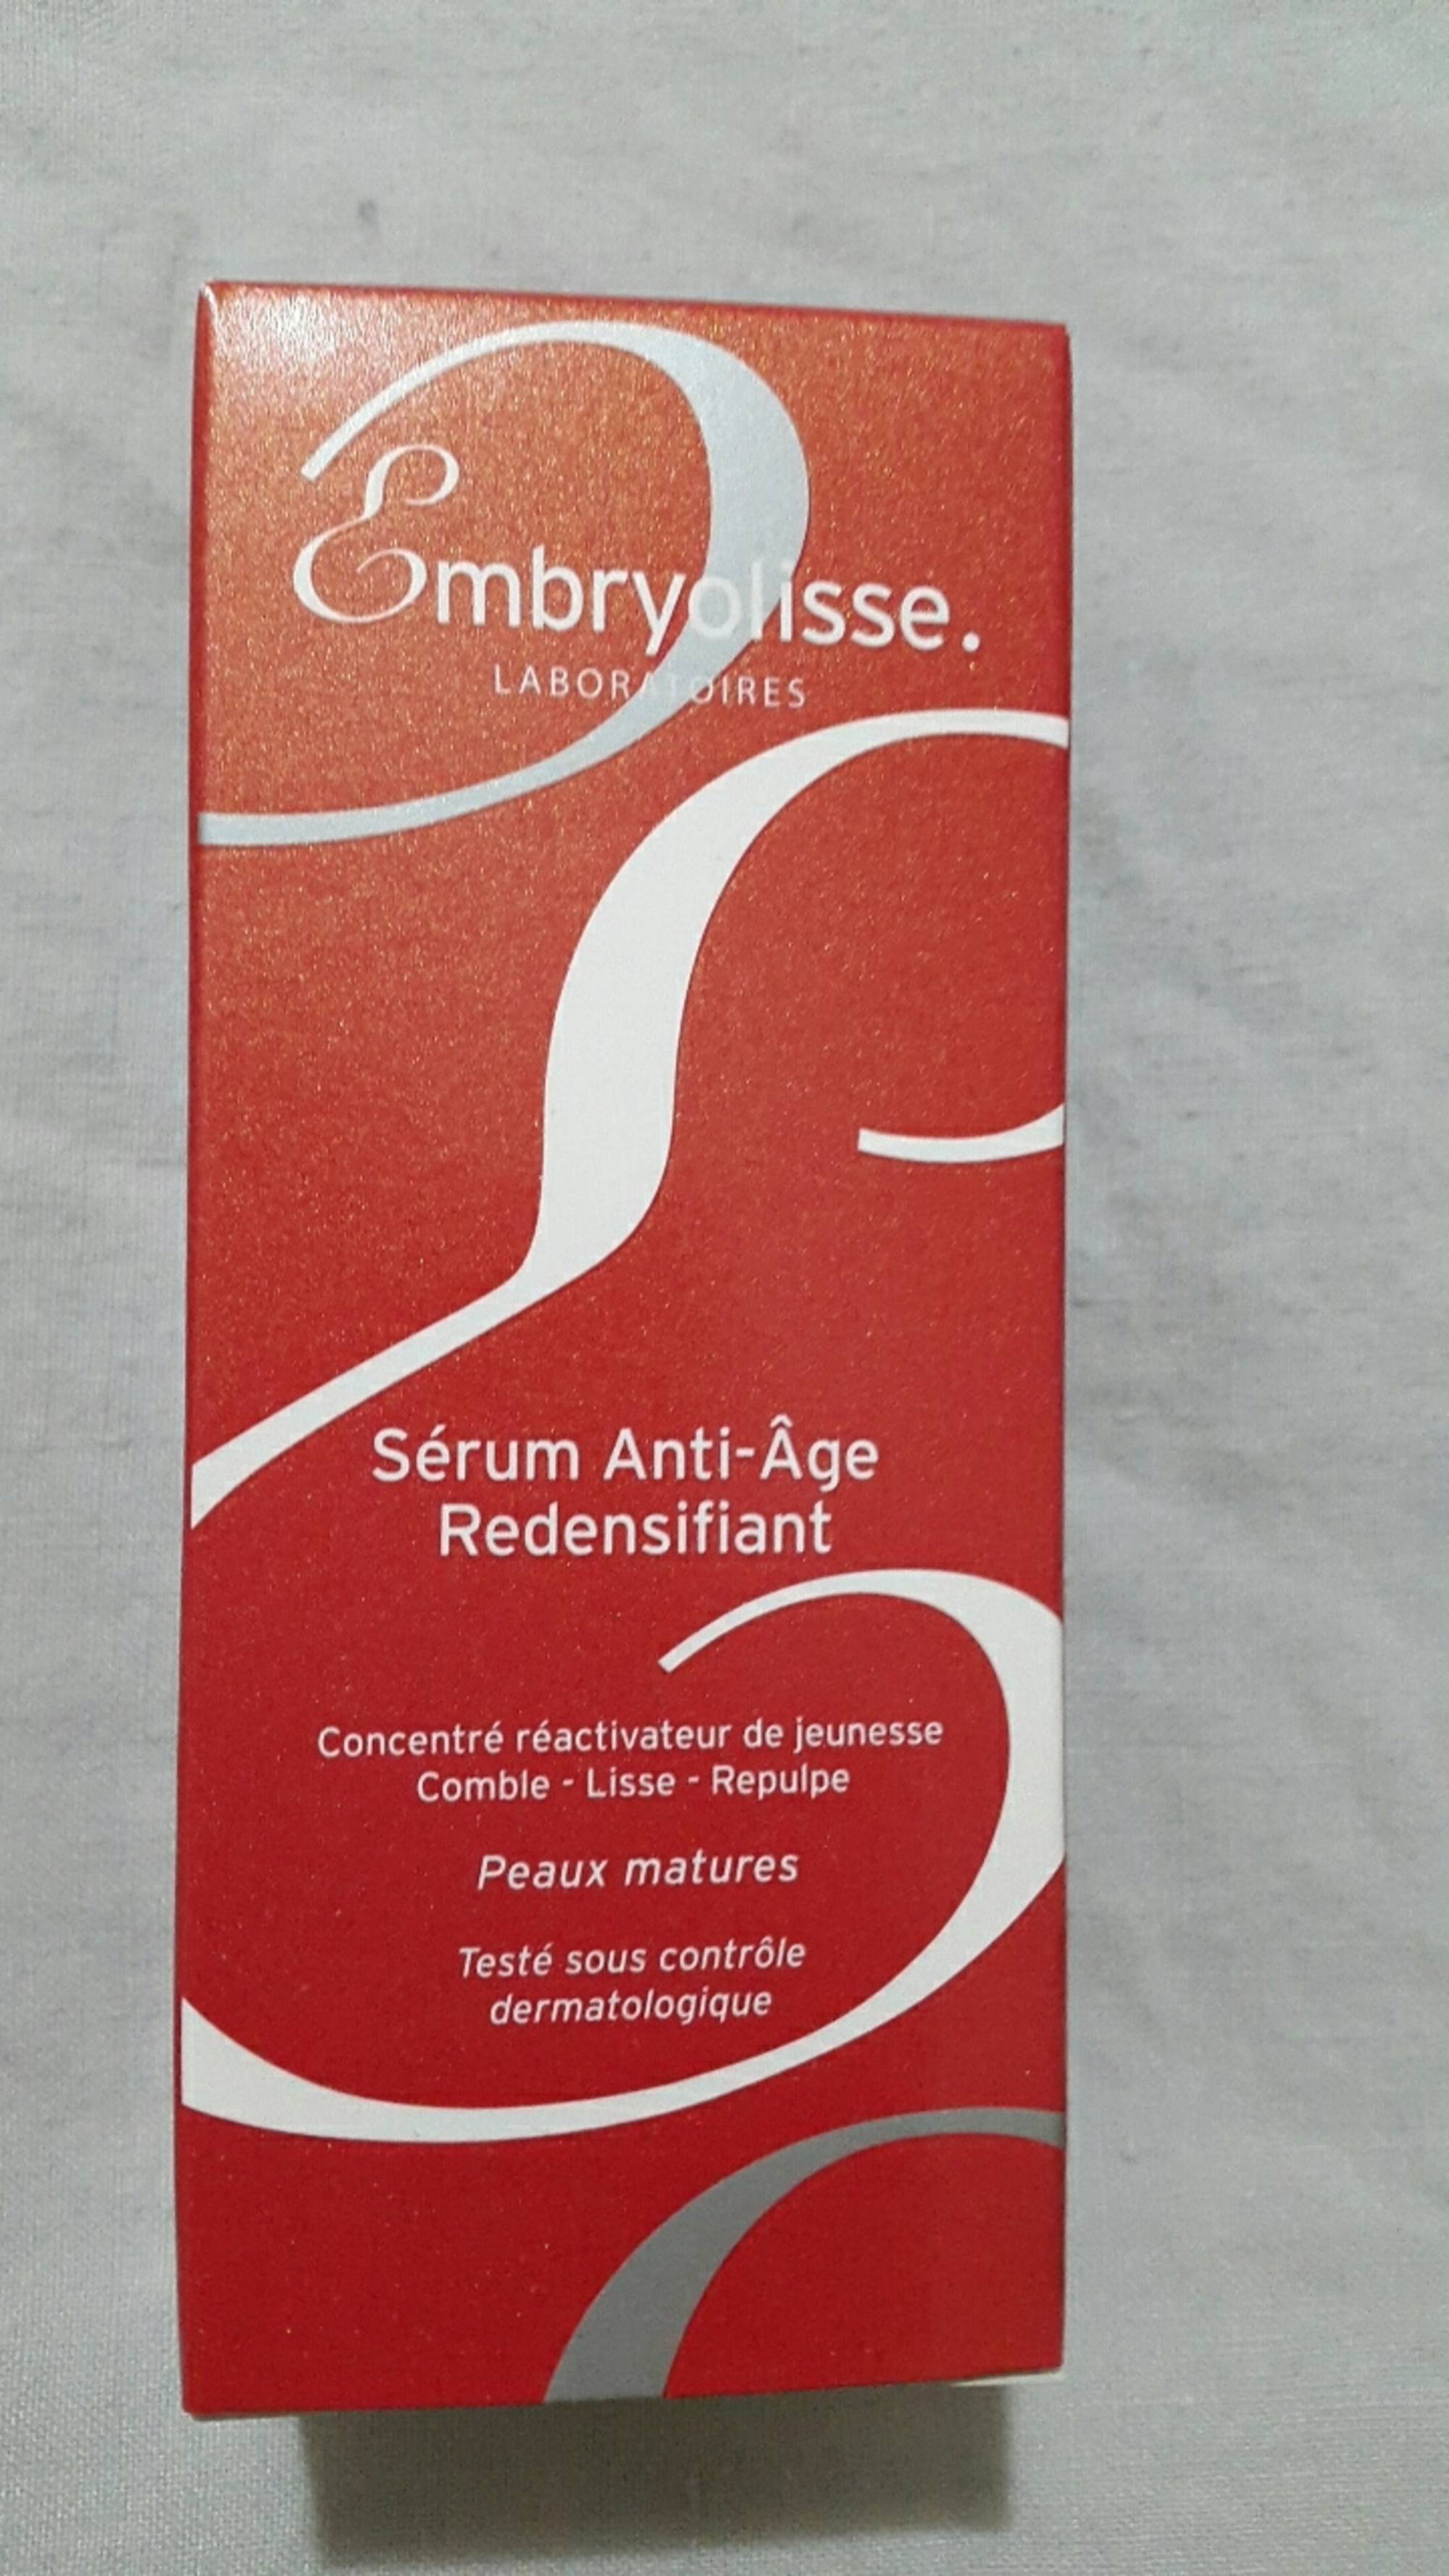 EMBRYOLISSE - Sérum anti-âge redensifiant